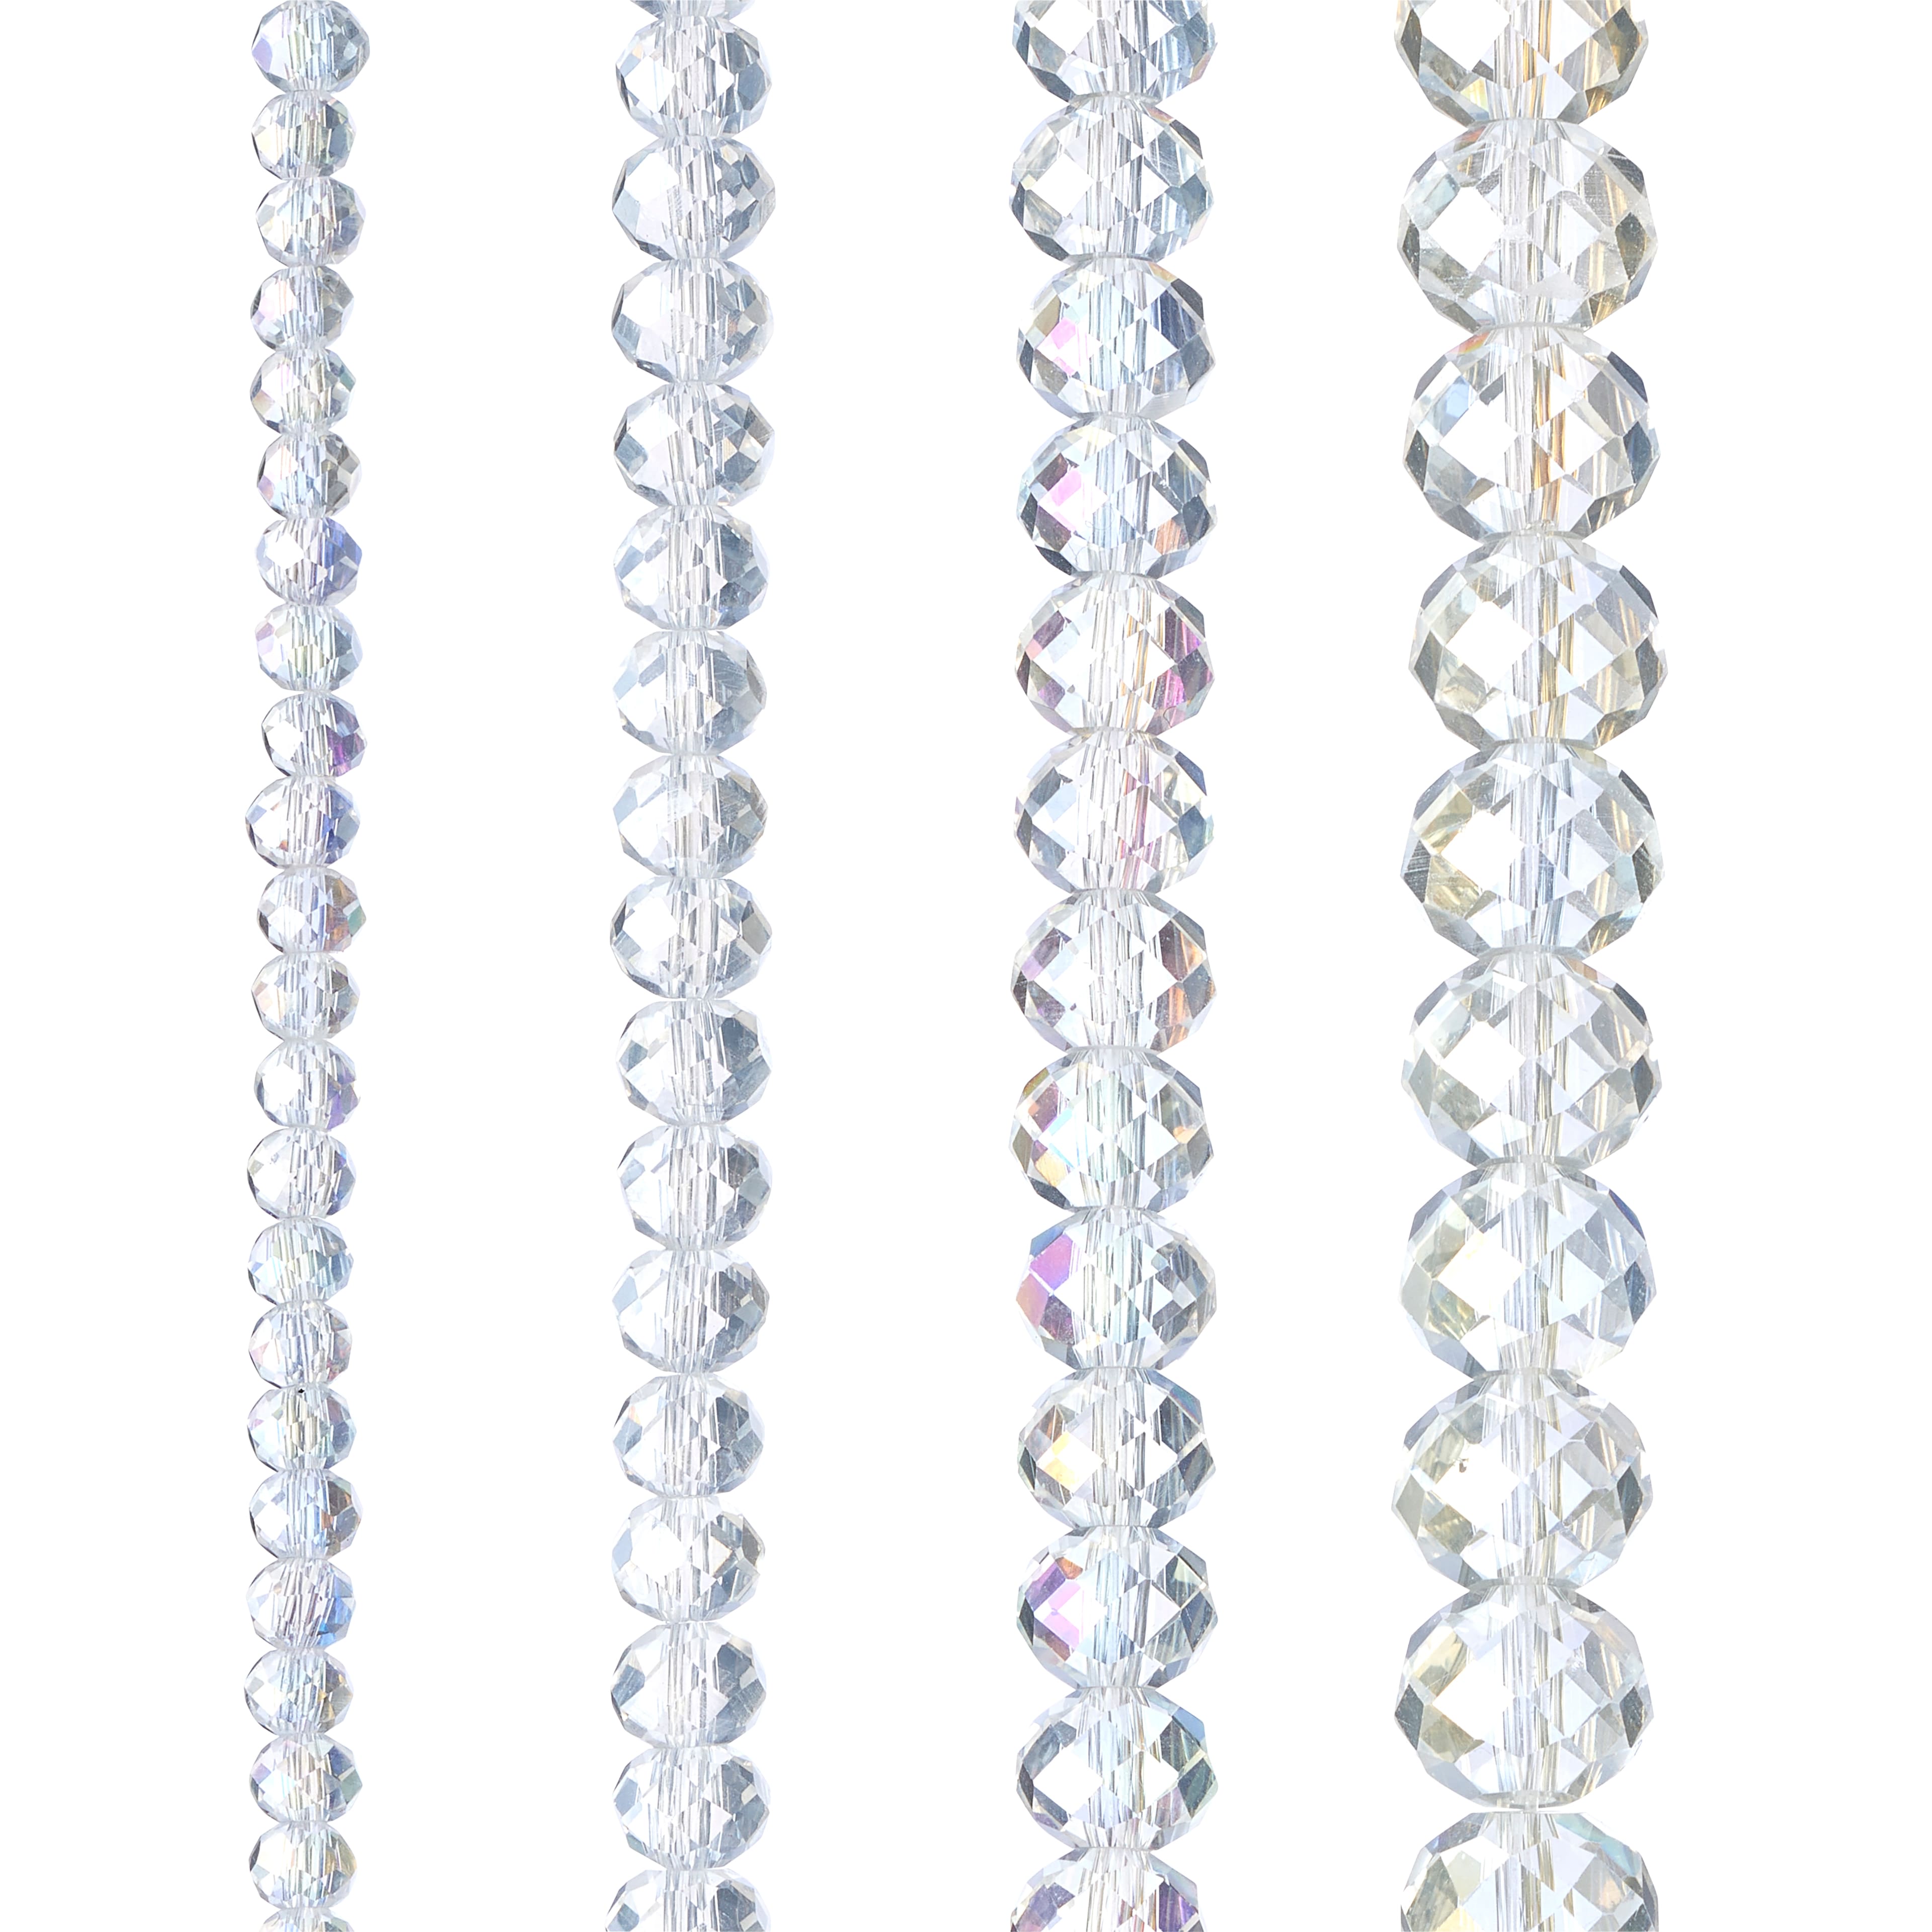 Iridescent Blue Large Glass Lentil Beads, 18mm by Bead Landing